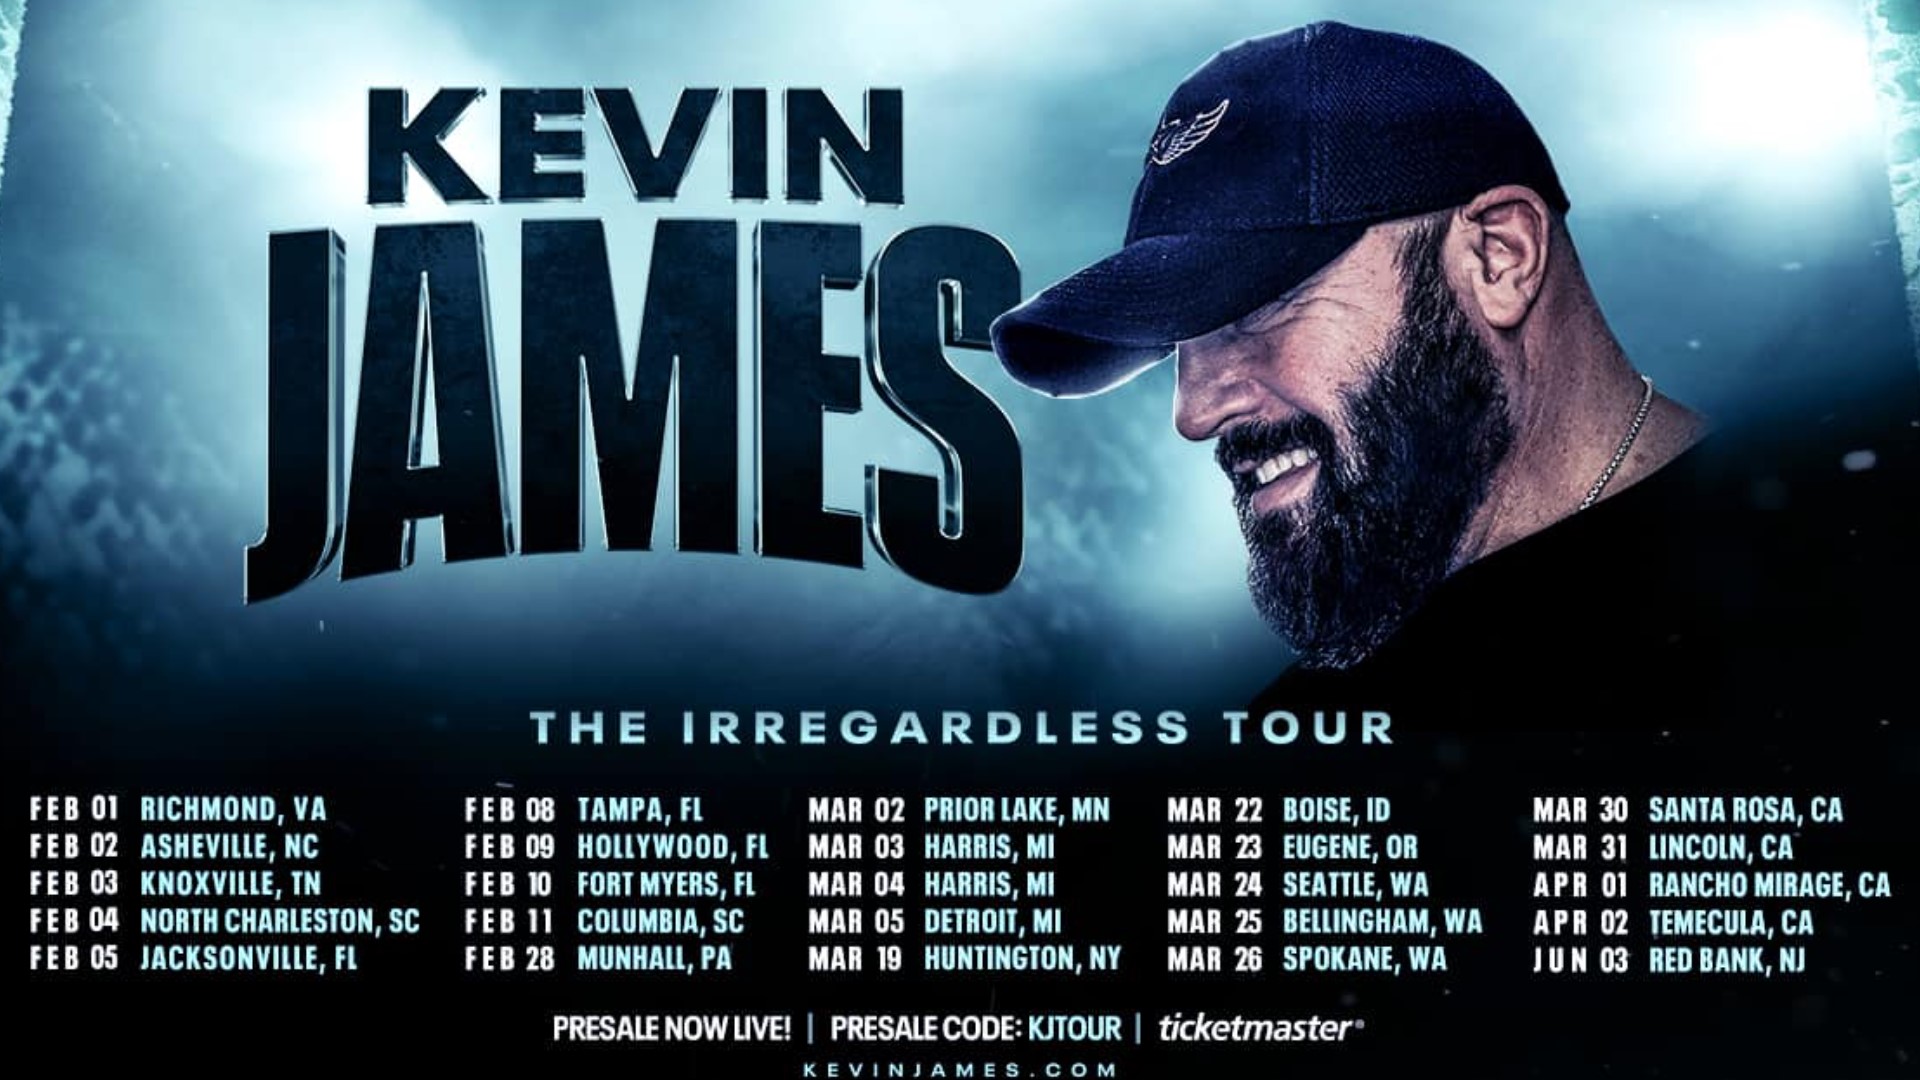 Comedian Kevin James tour coming to Spokane